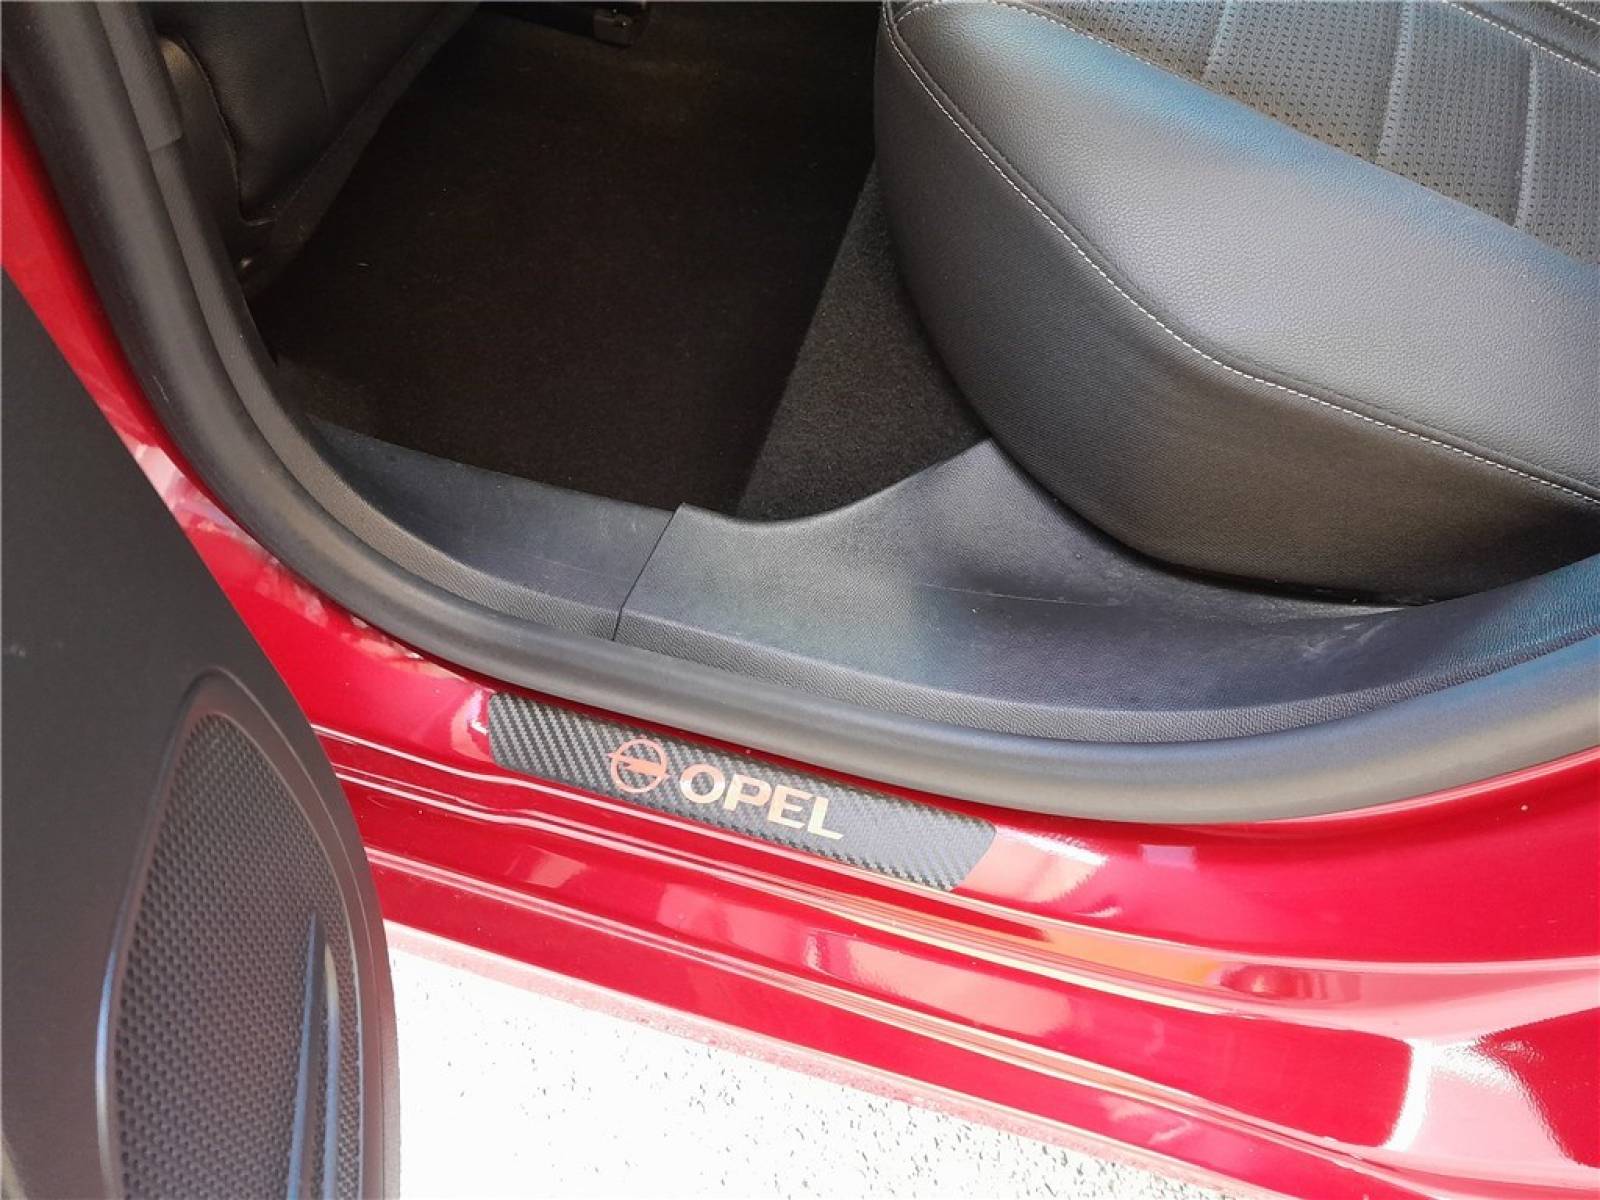 OPEL Corsa 1.2 Turbo 100 ch BVA8 - véhicule d'occasion - Groupe Guillet - Opel Magicauto - Chalon-sur-Saône - 71380 - Saint-Marcel - 26